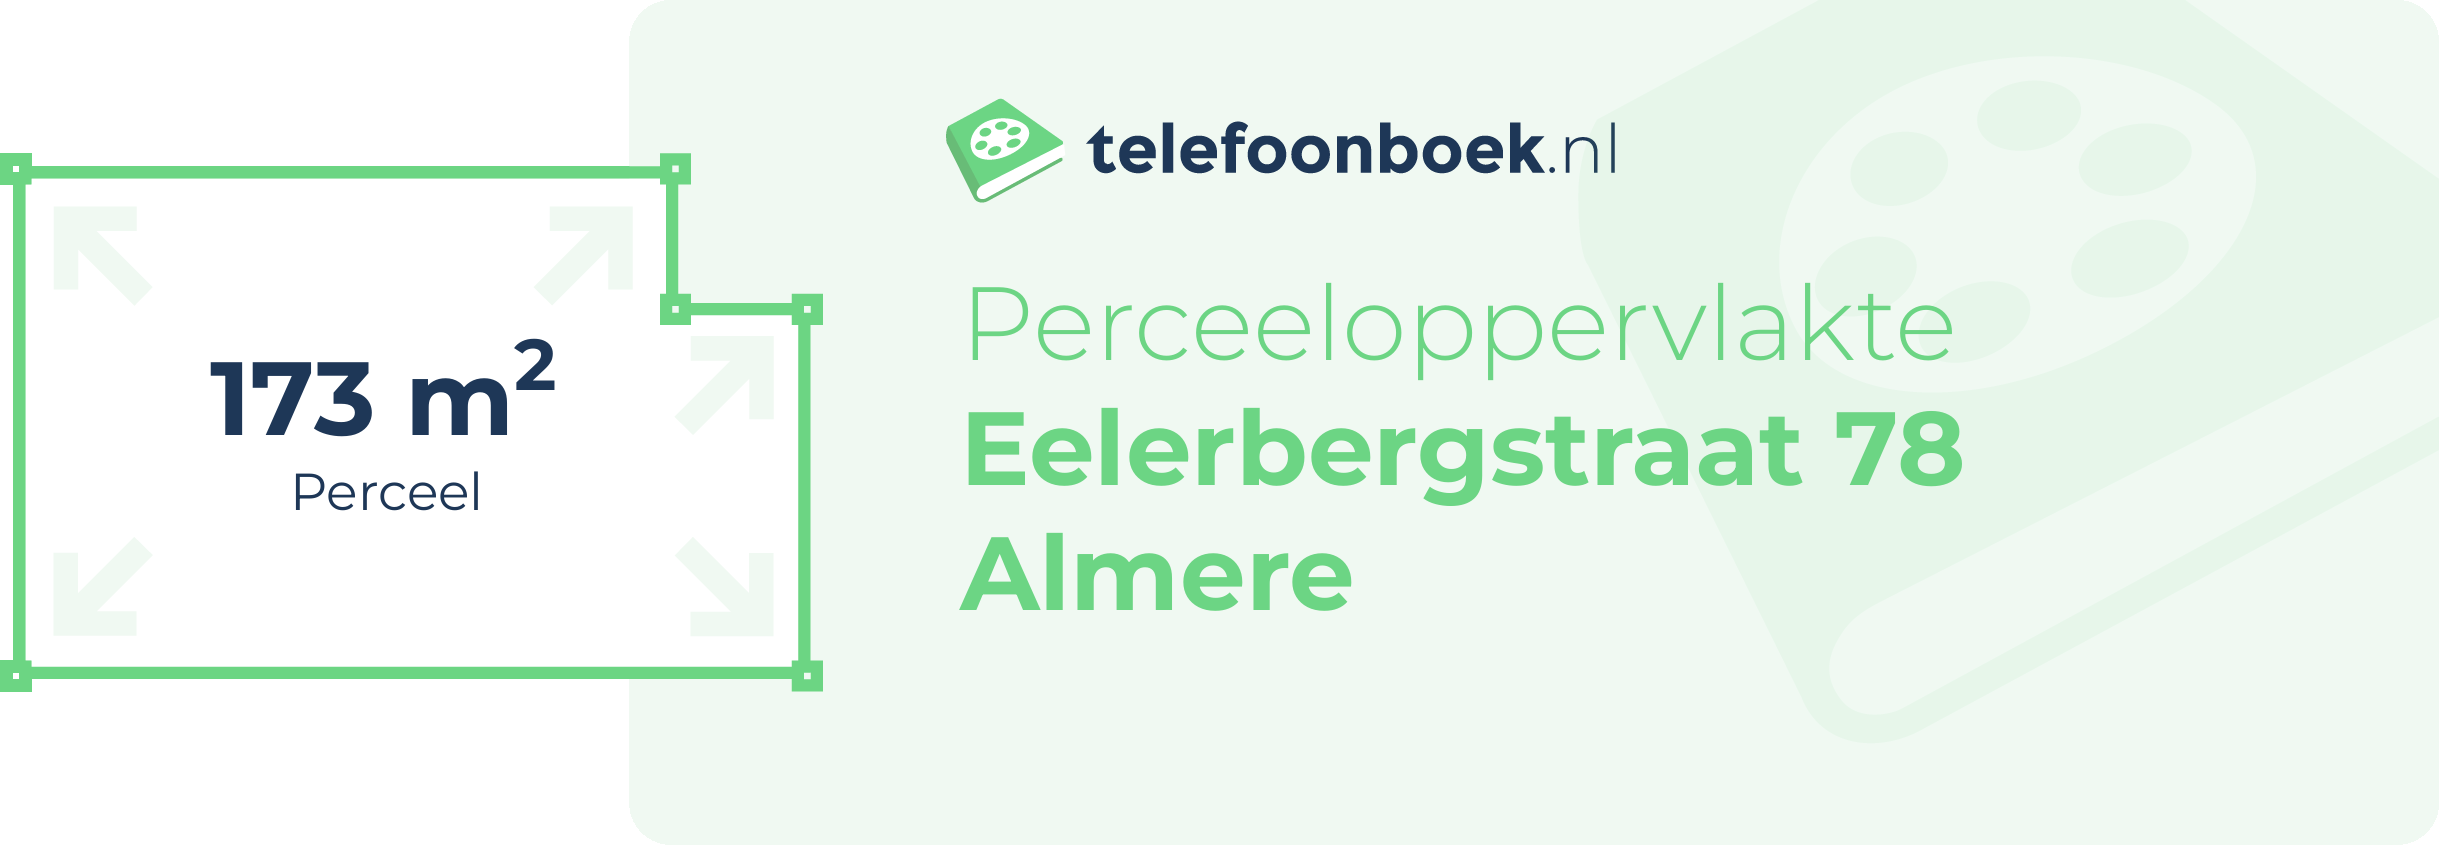 Perceeloppervlakte Eelerbergstraat 78 Almere